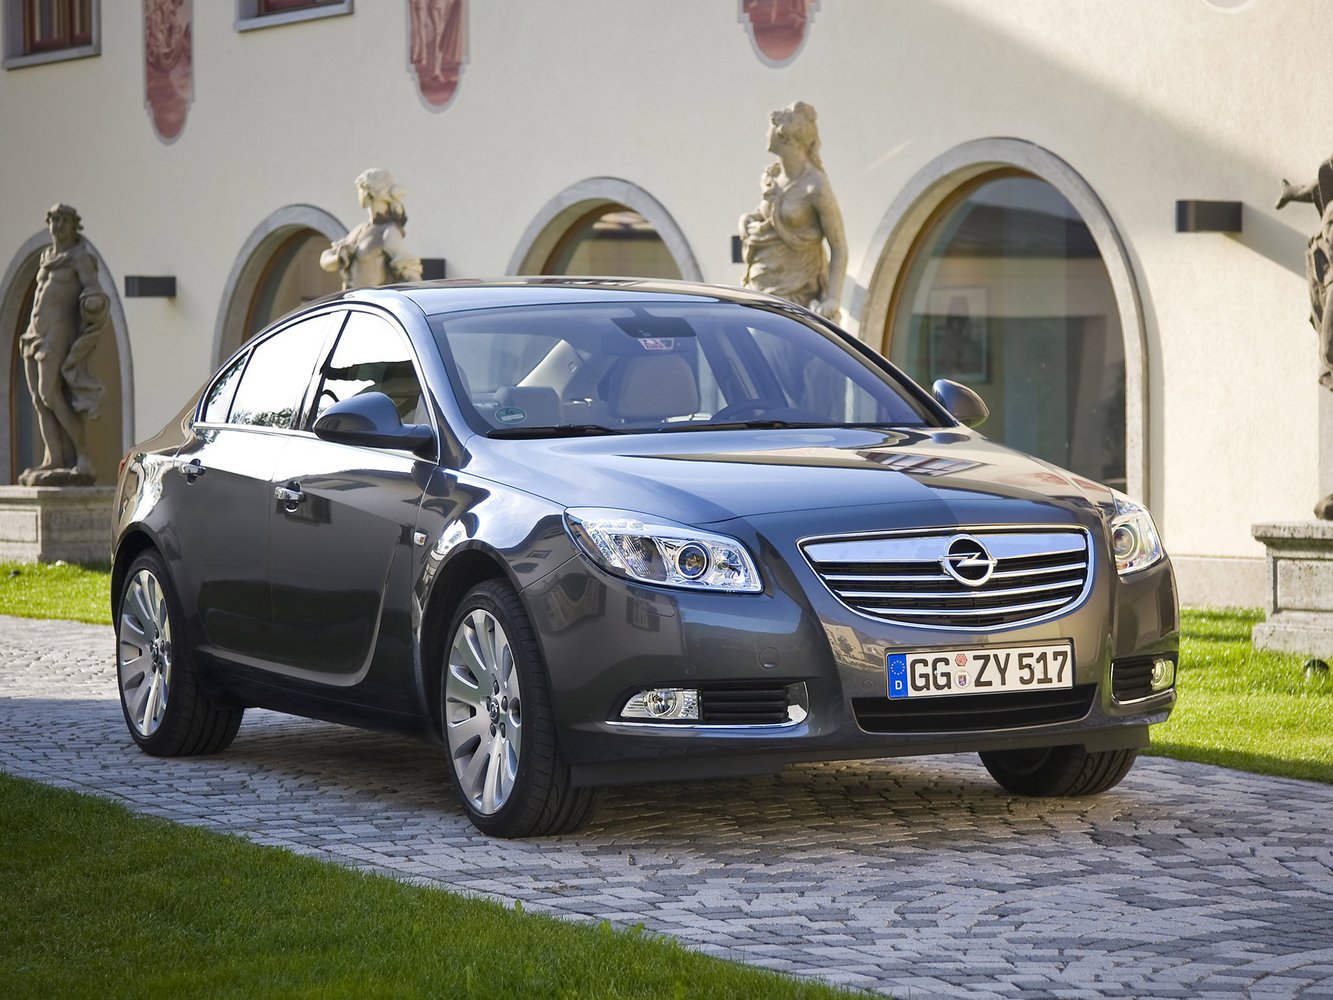 Opel Insignia 2008 - 2013